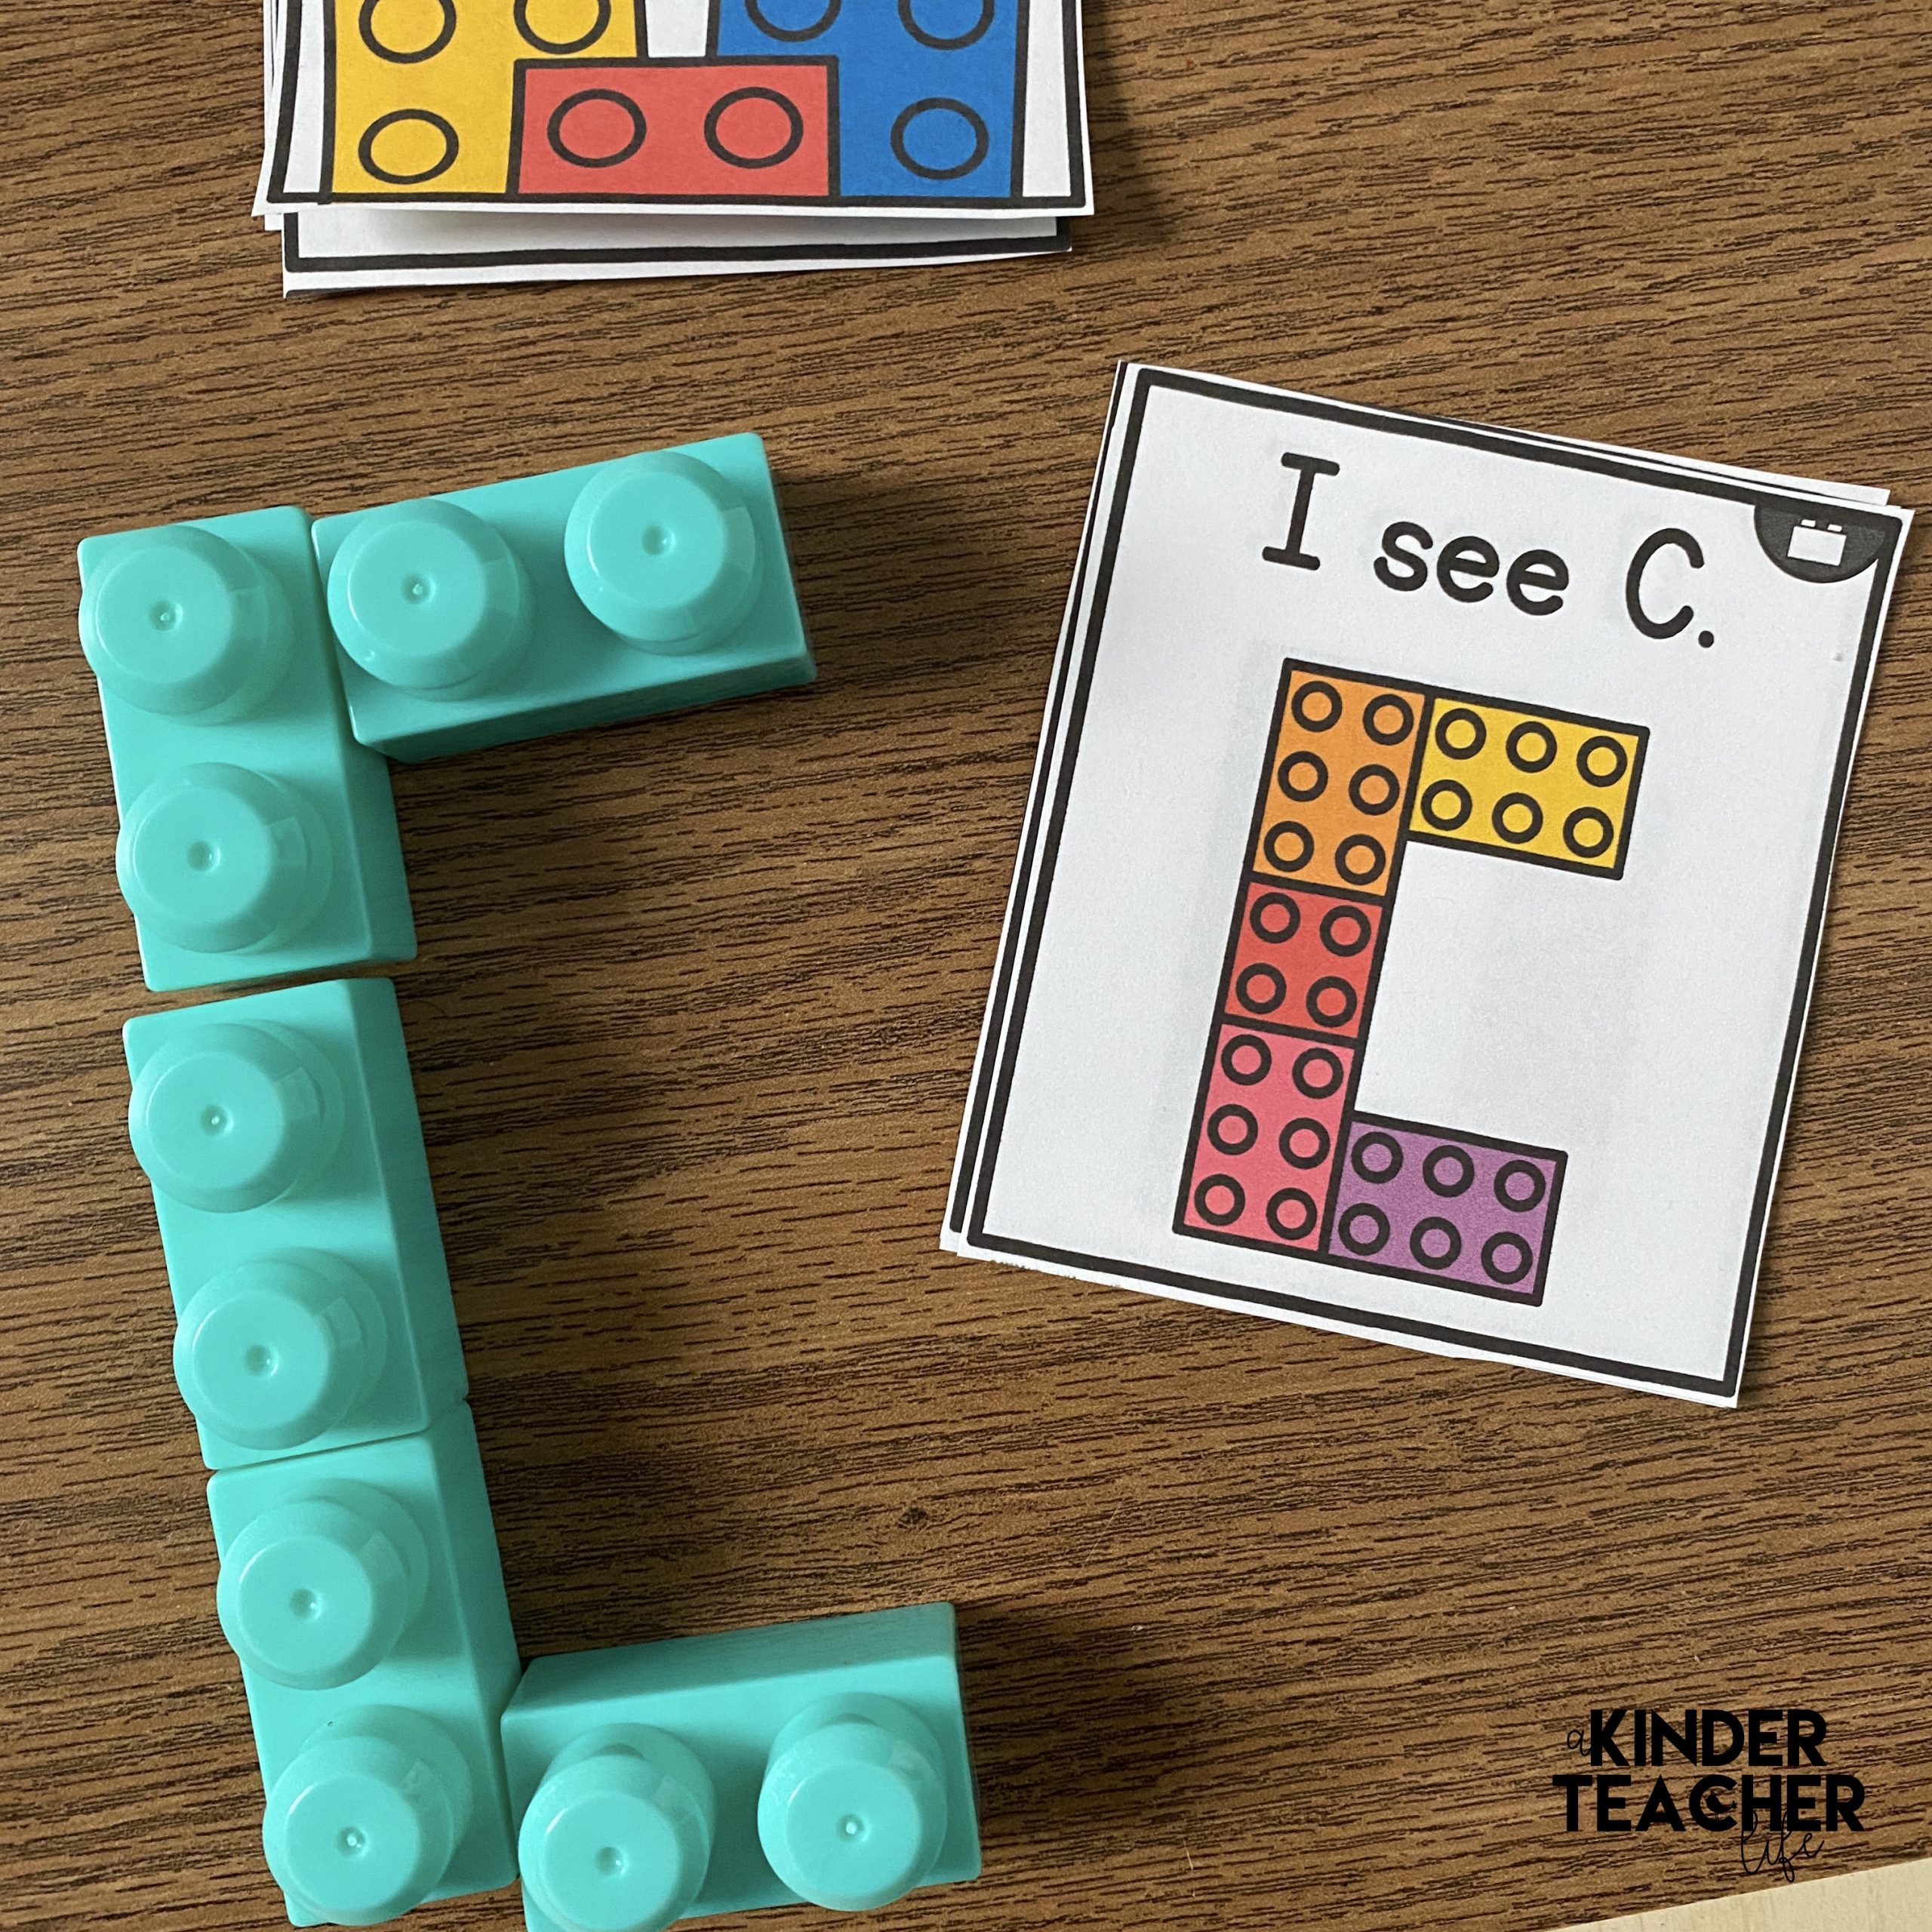 Plastic Blocks Task Cards - Use plastic blocks to build numbers and letters.